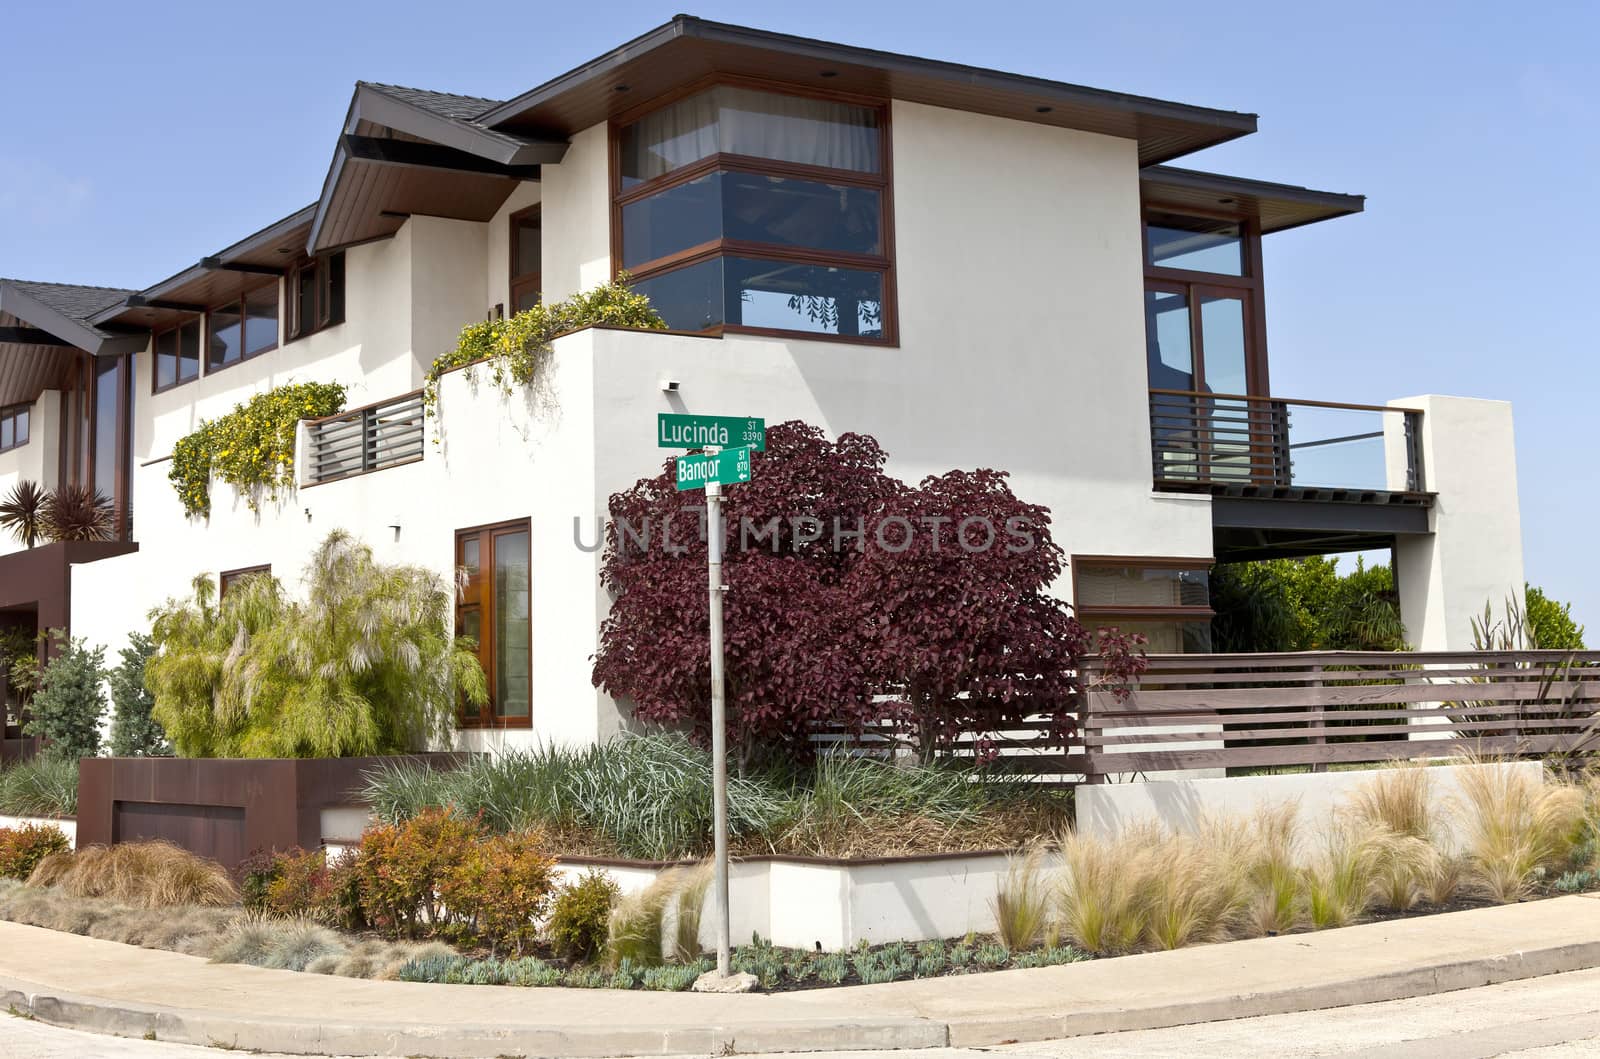 Modern residential condominiums Point Loma California.